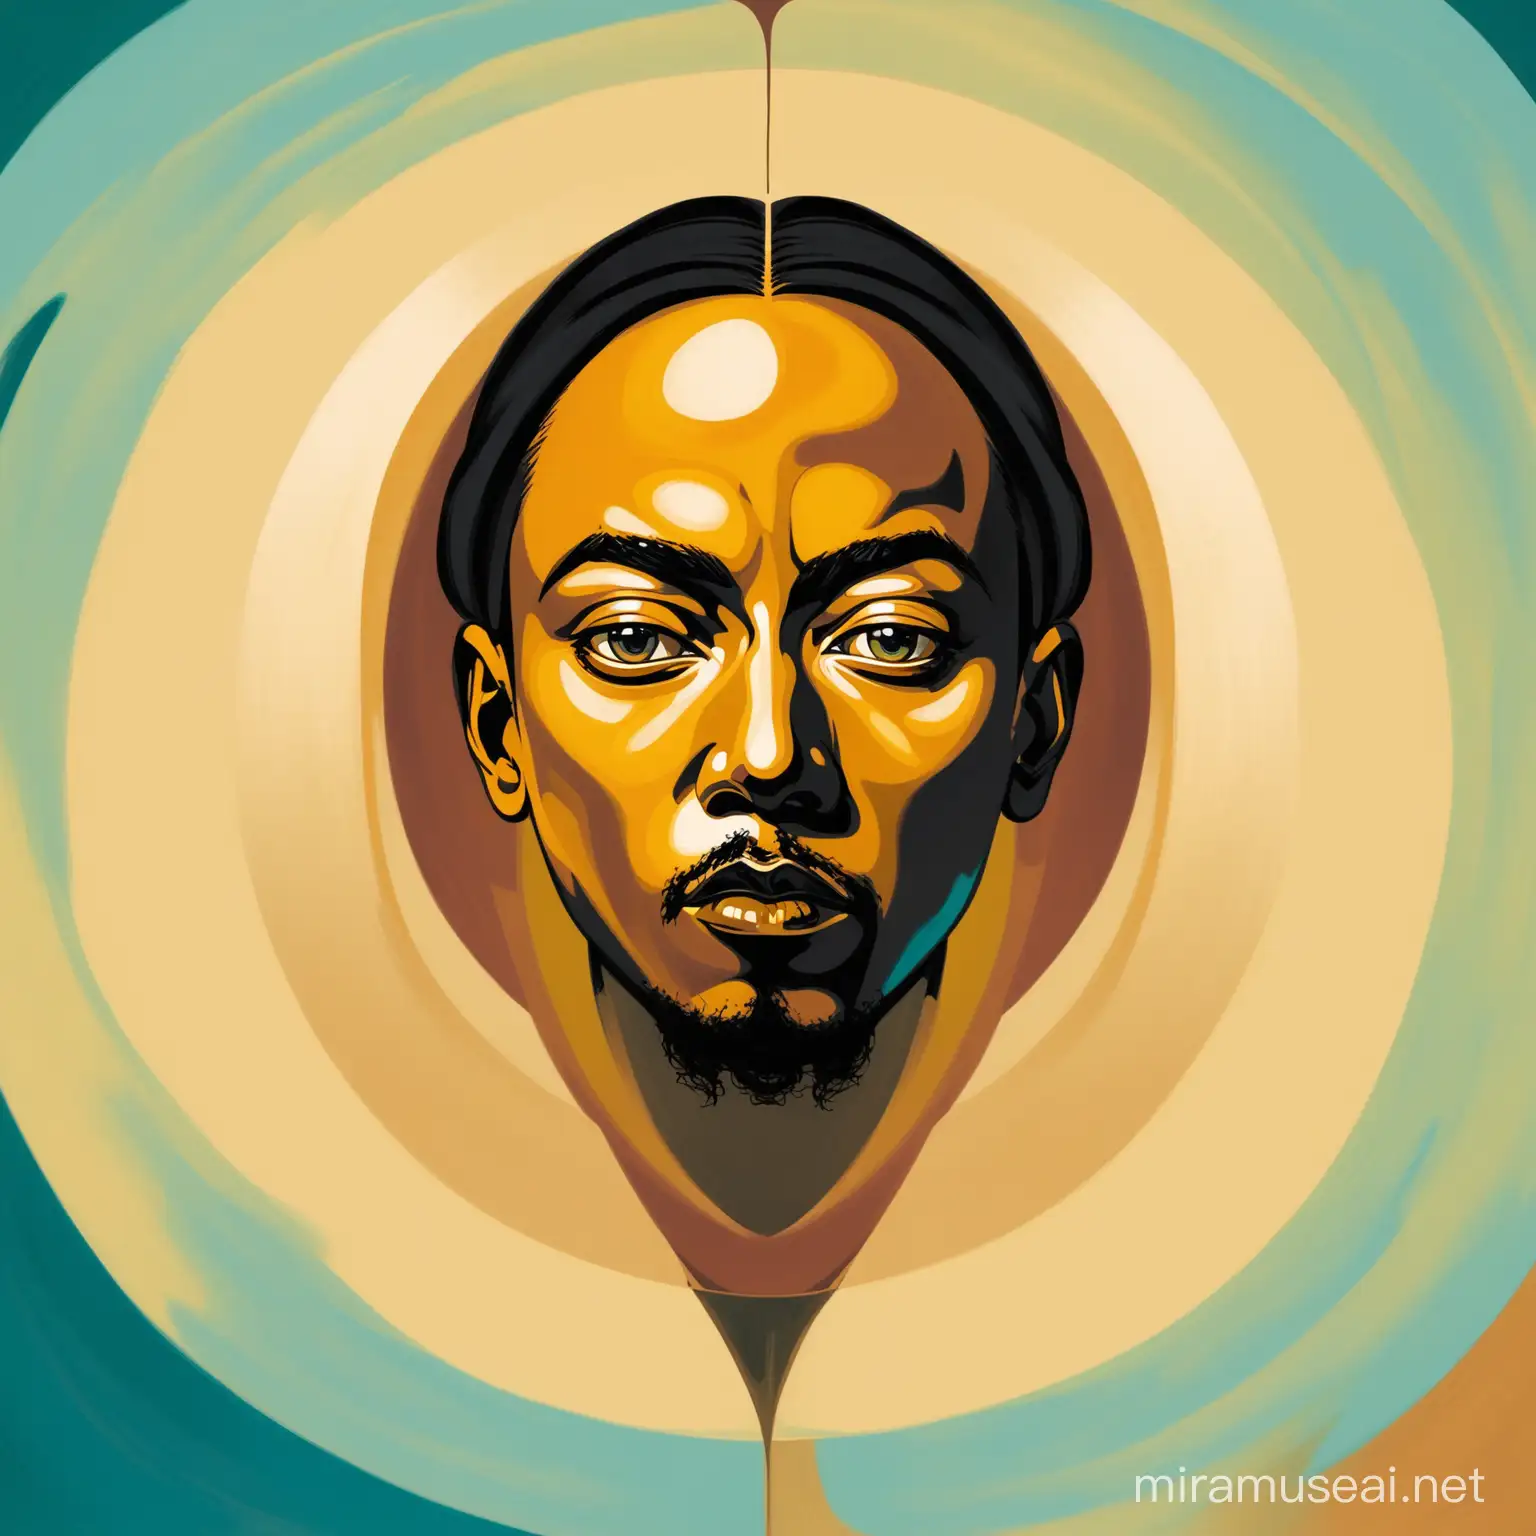 Kendrick Lamar as an Abstract DalInspired Figure in Music Art